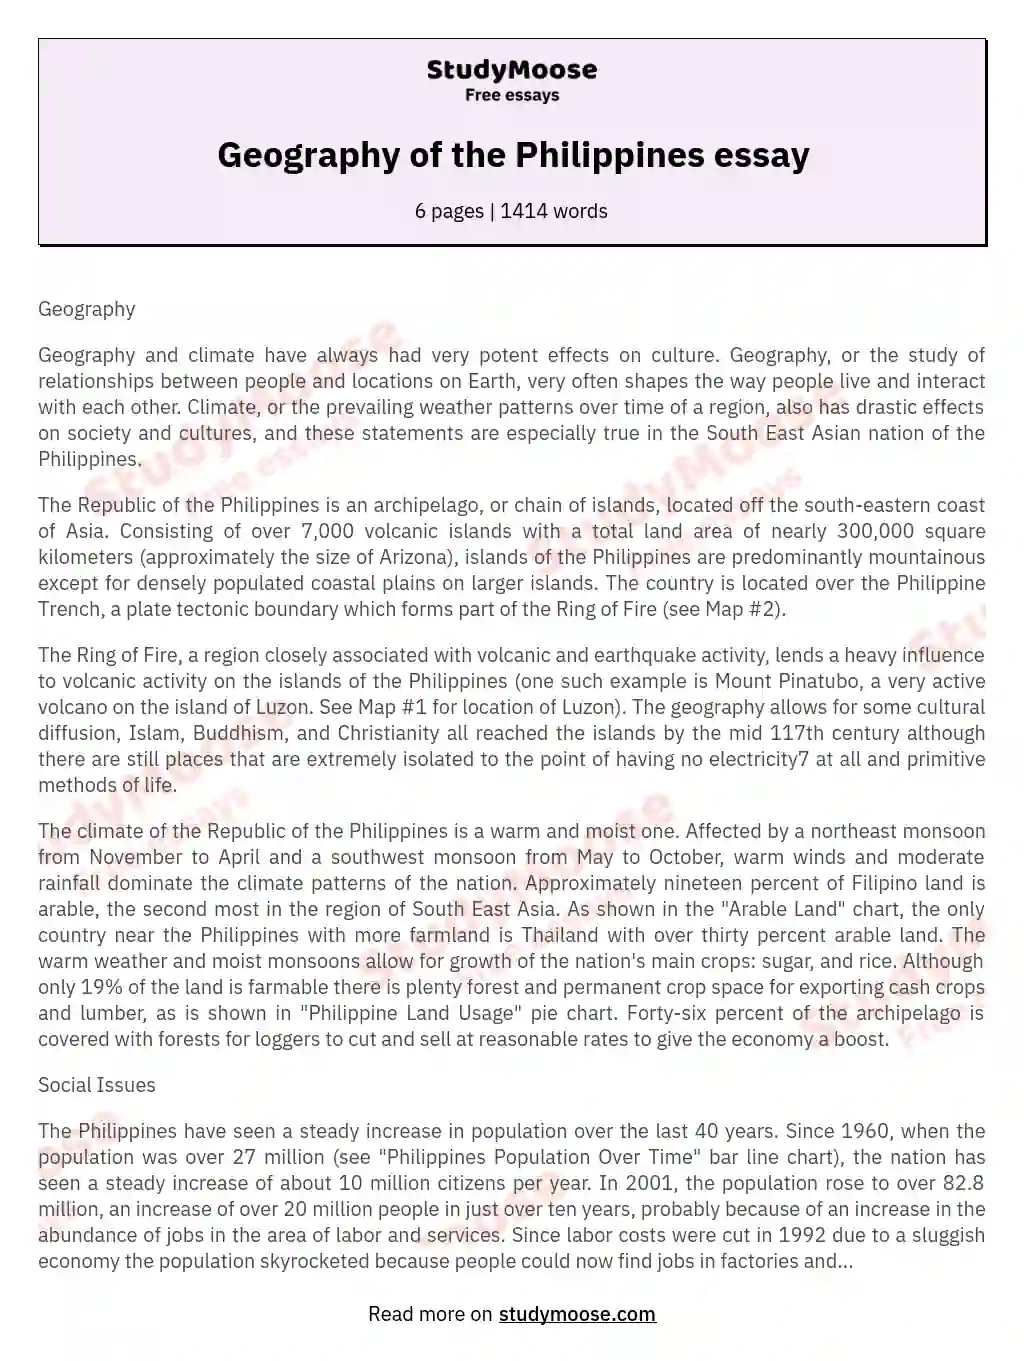 argumentative essay about west philippine sea